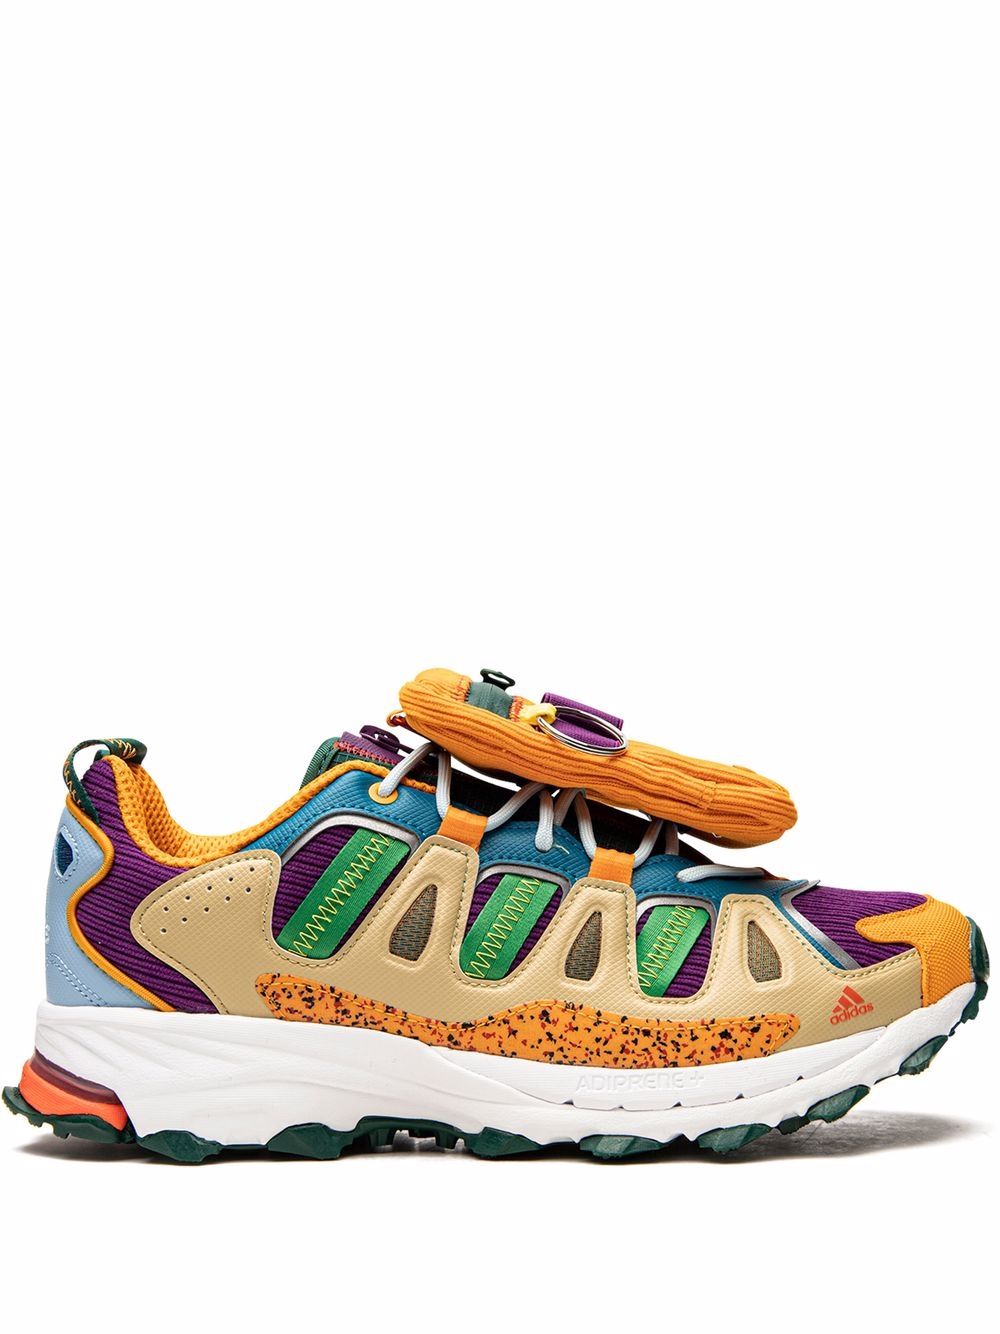 adidas x Sean Wotherspoon Superturf Adventure "Jiminy Cricket" sneakers - Yellow von adidas